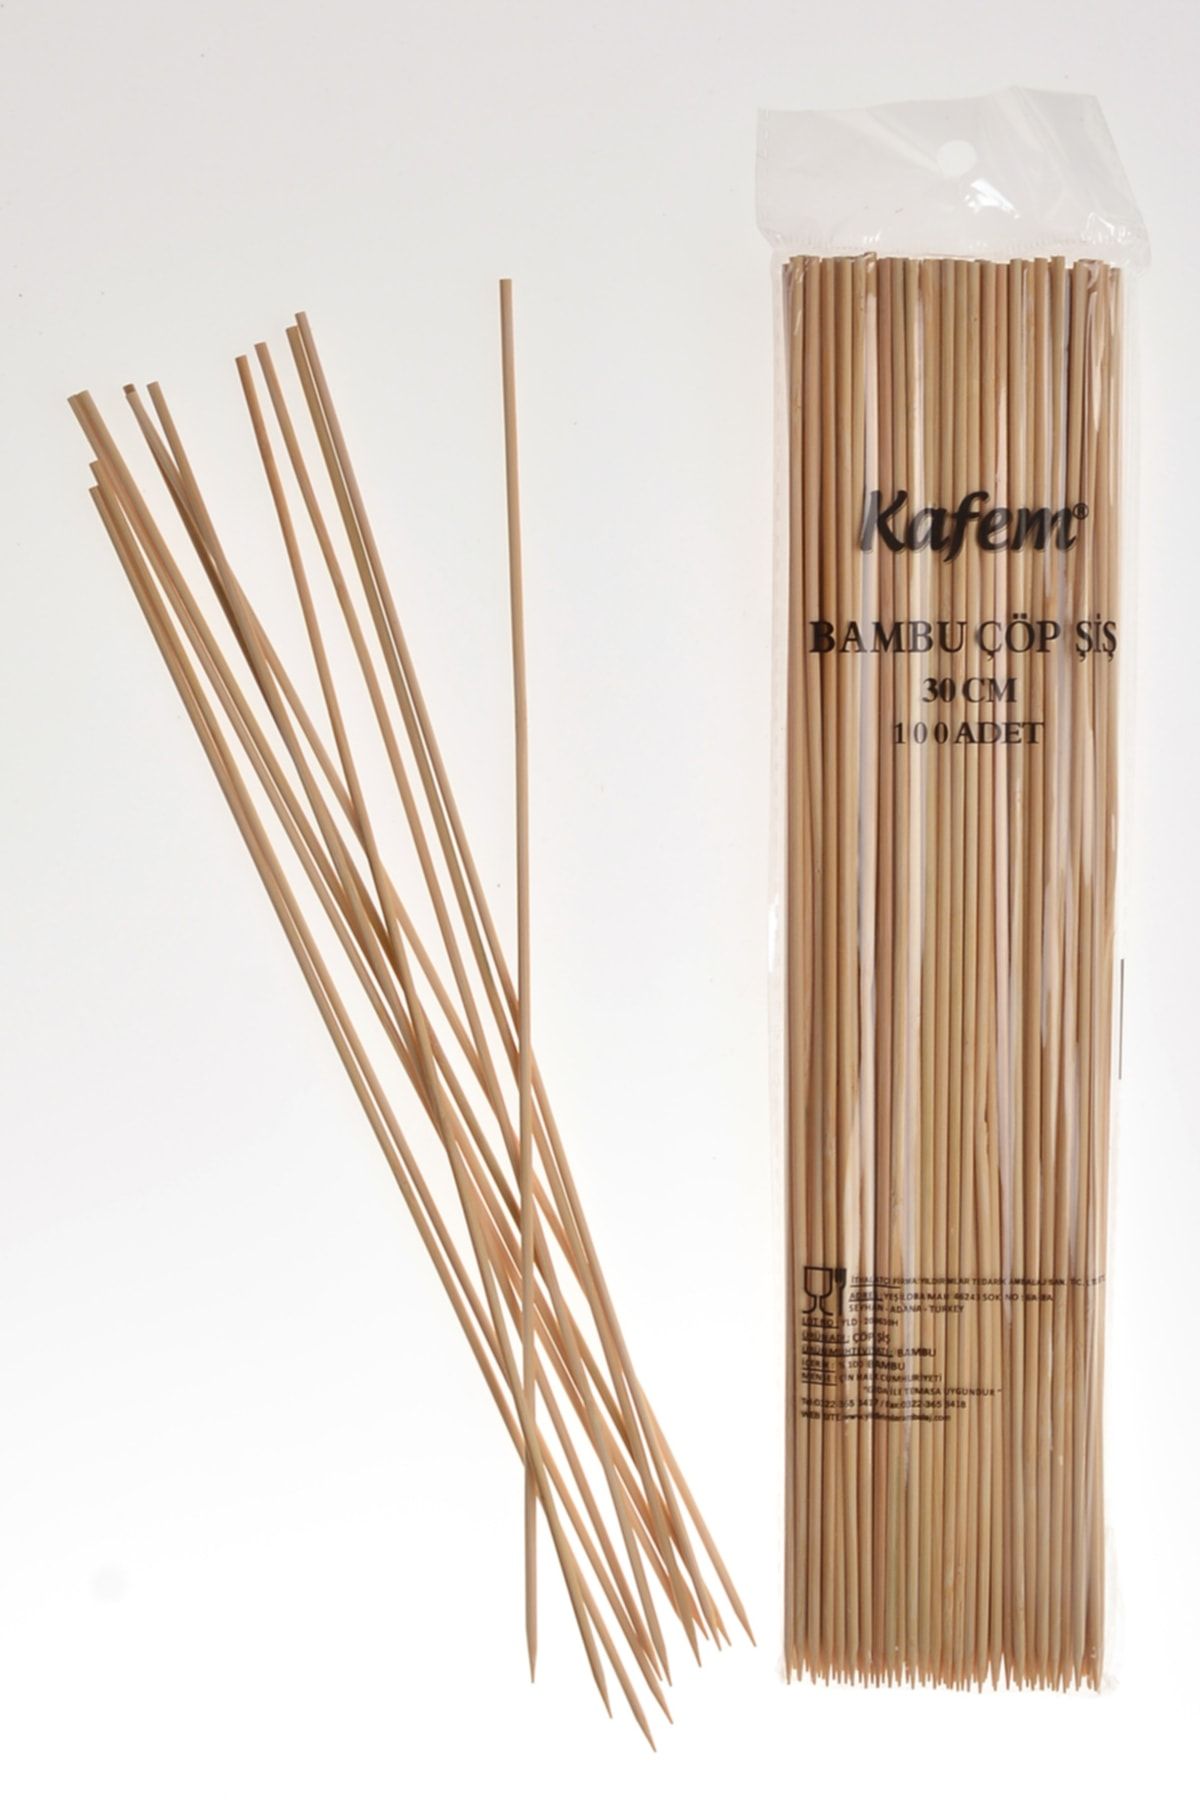 KAFEM Bambu Çöp Şiş 30 Cm 50 Pk X 100 Adet -